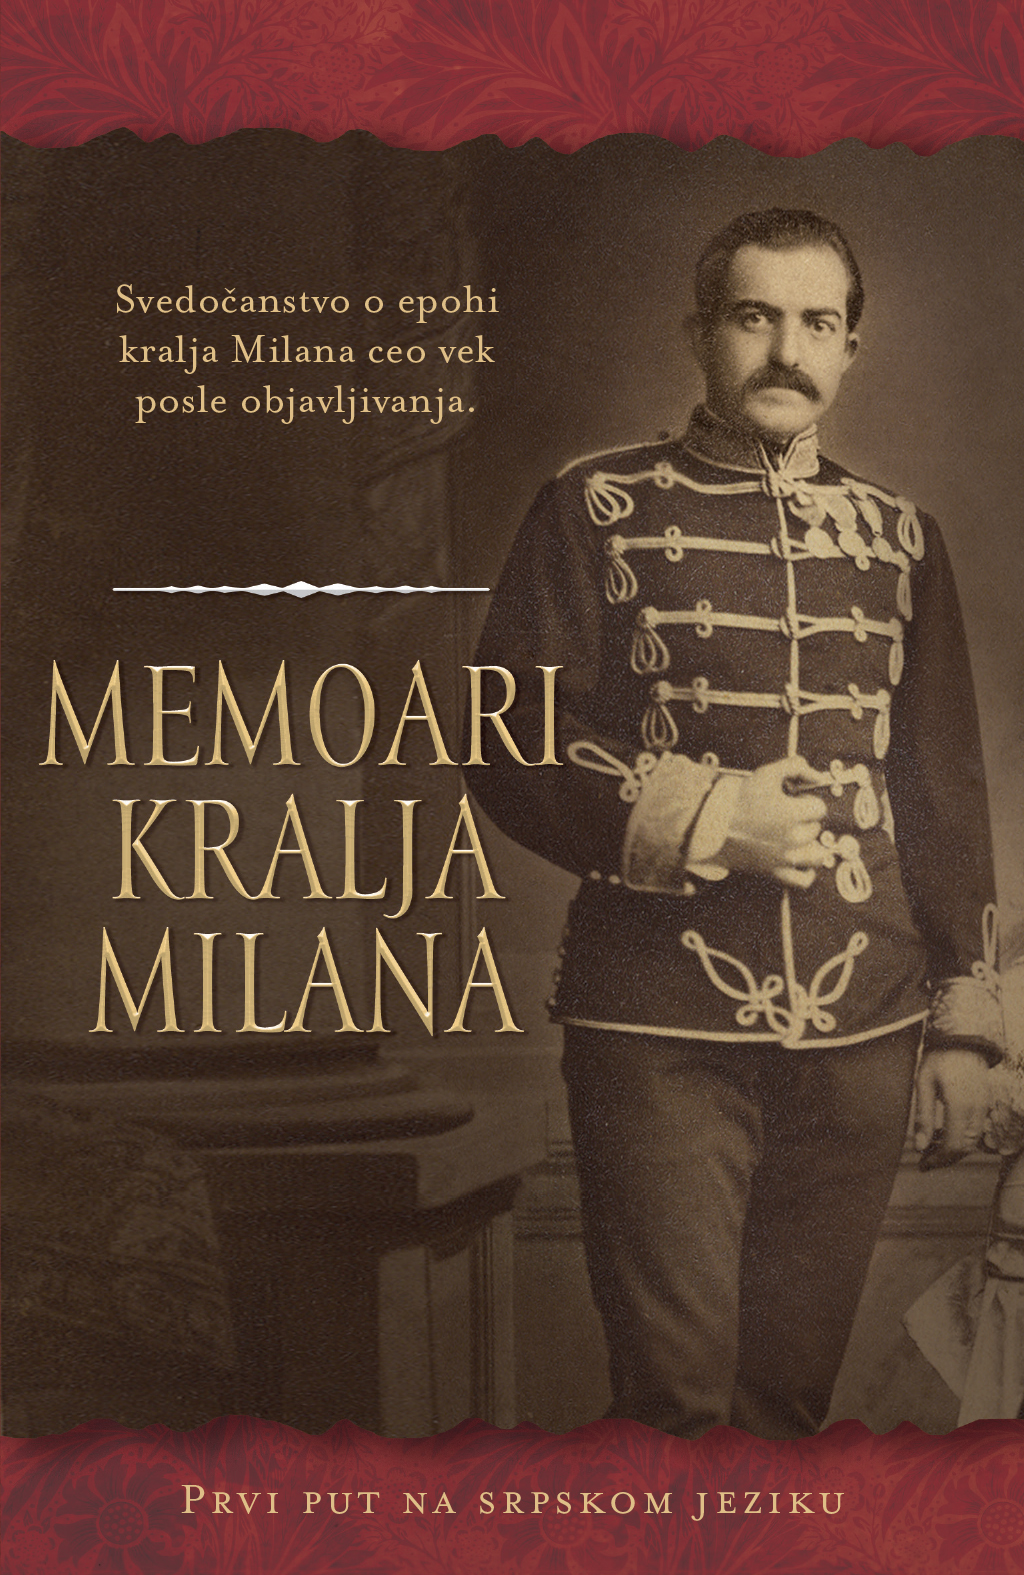 Memoari kralja Milana, foto: Promo Laguna